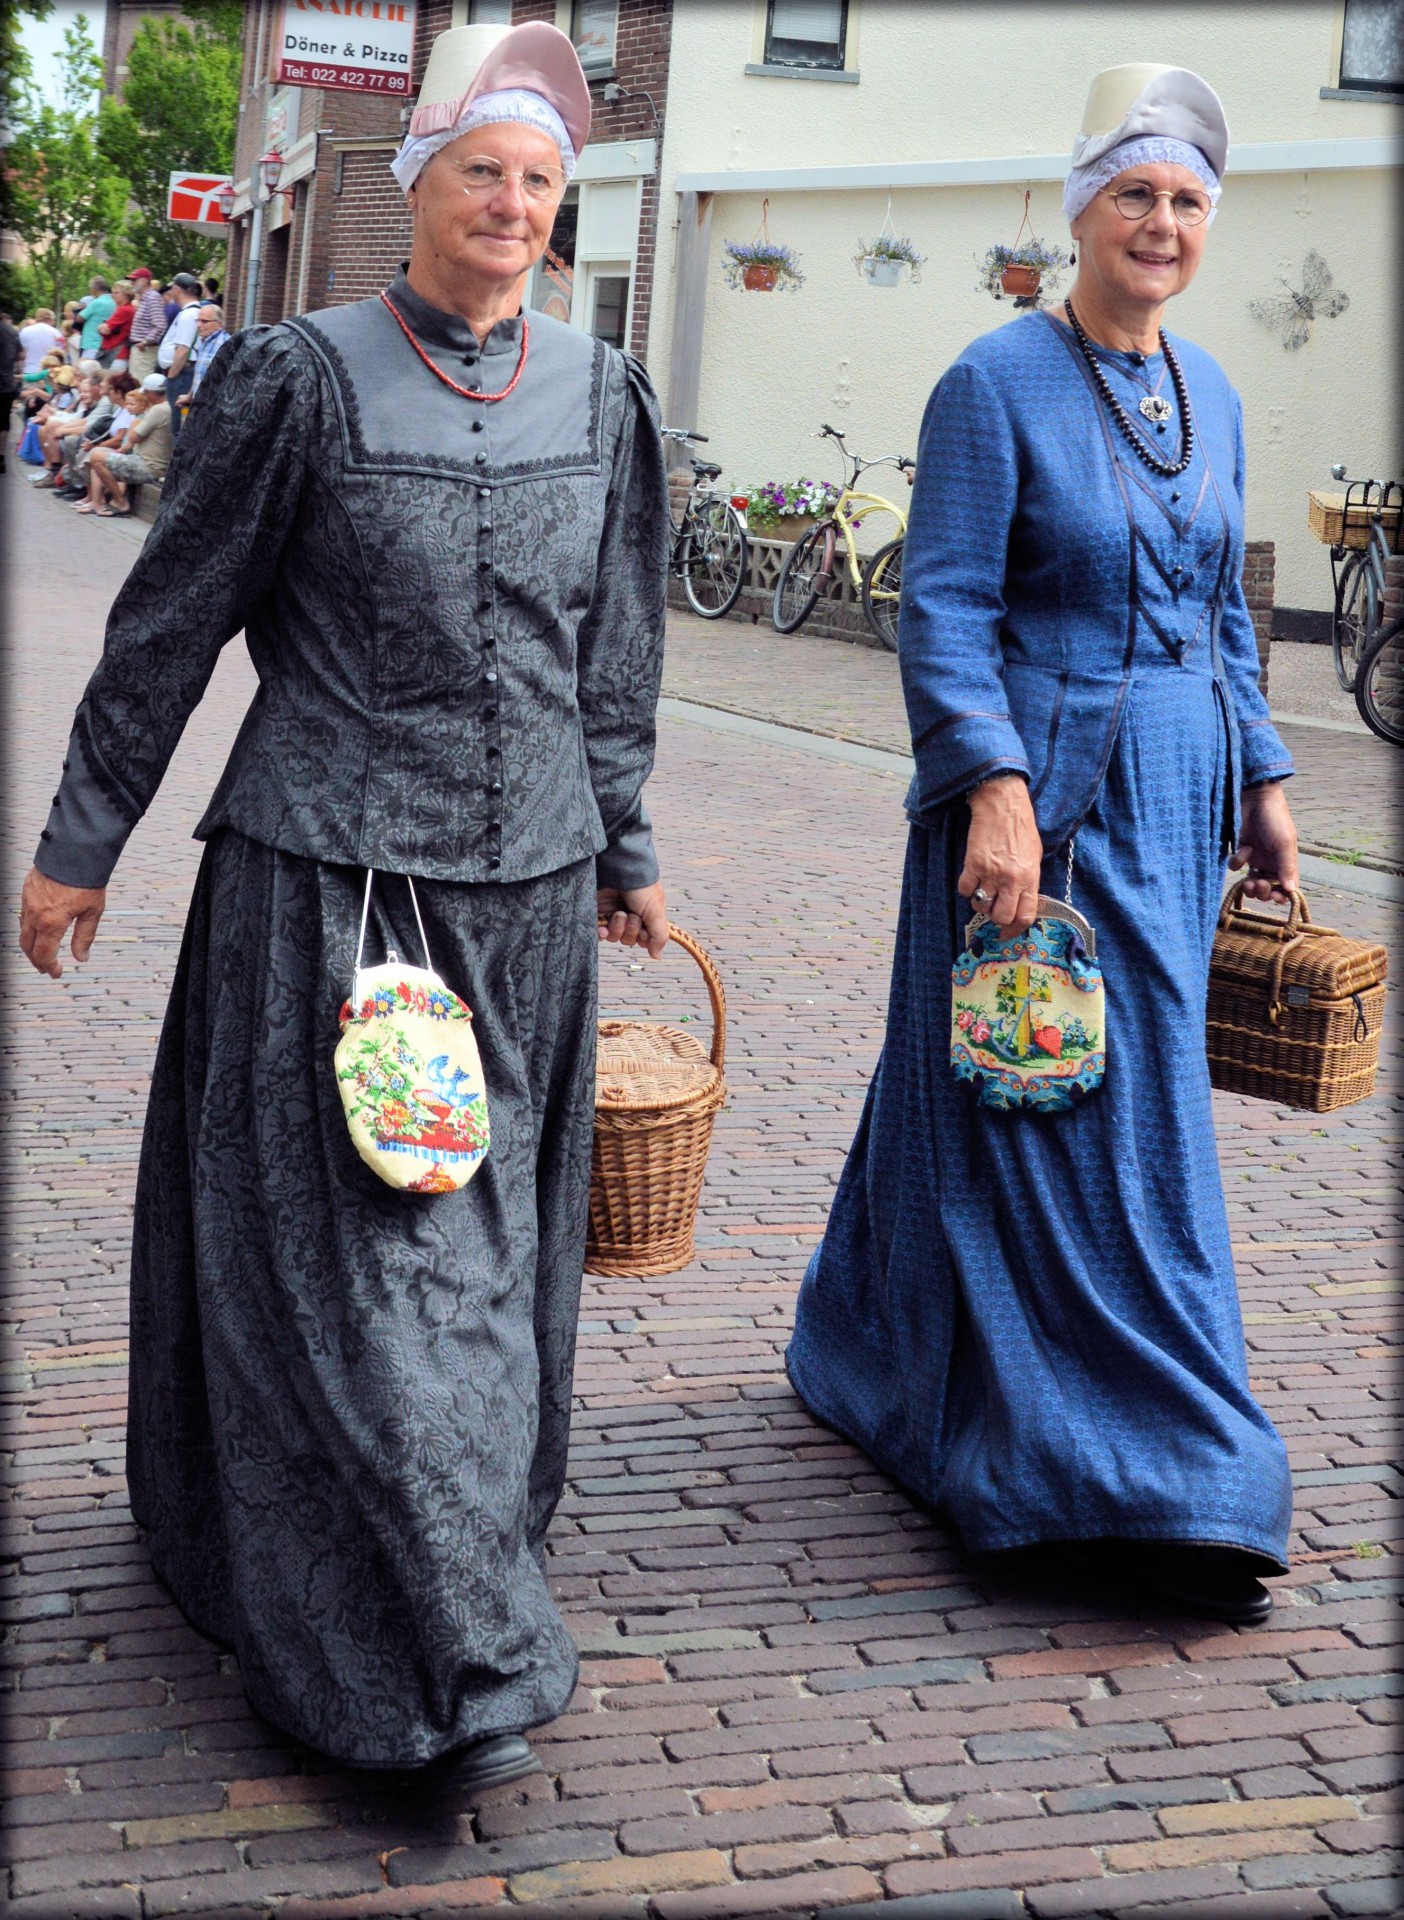 Folklore Costume Market 13 Free Stock Photo - Public Domain Pictures